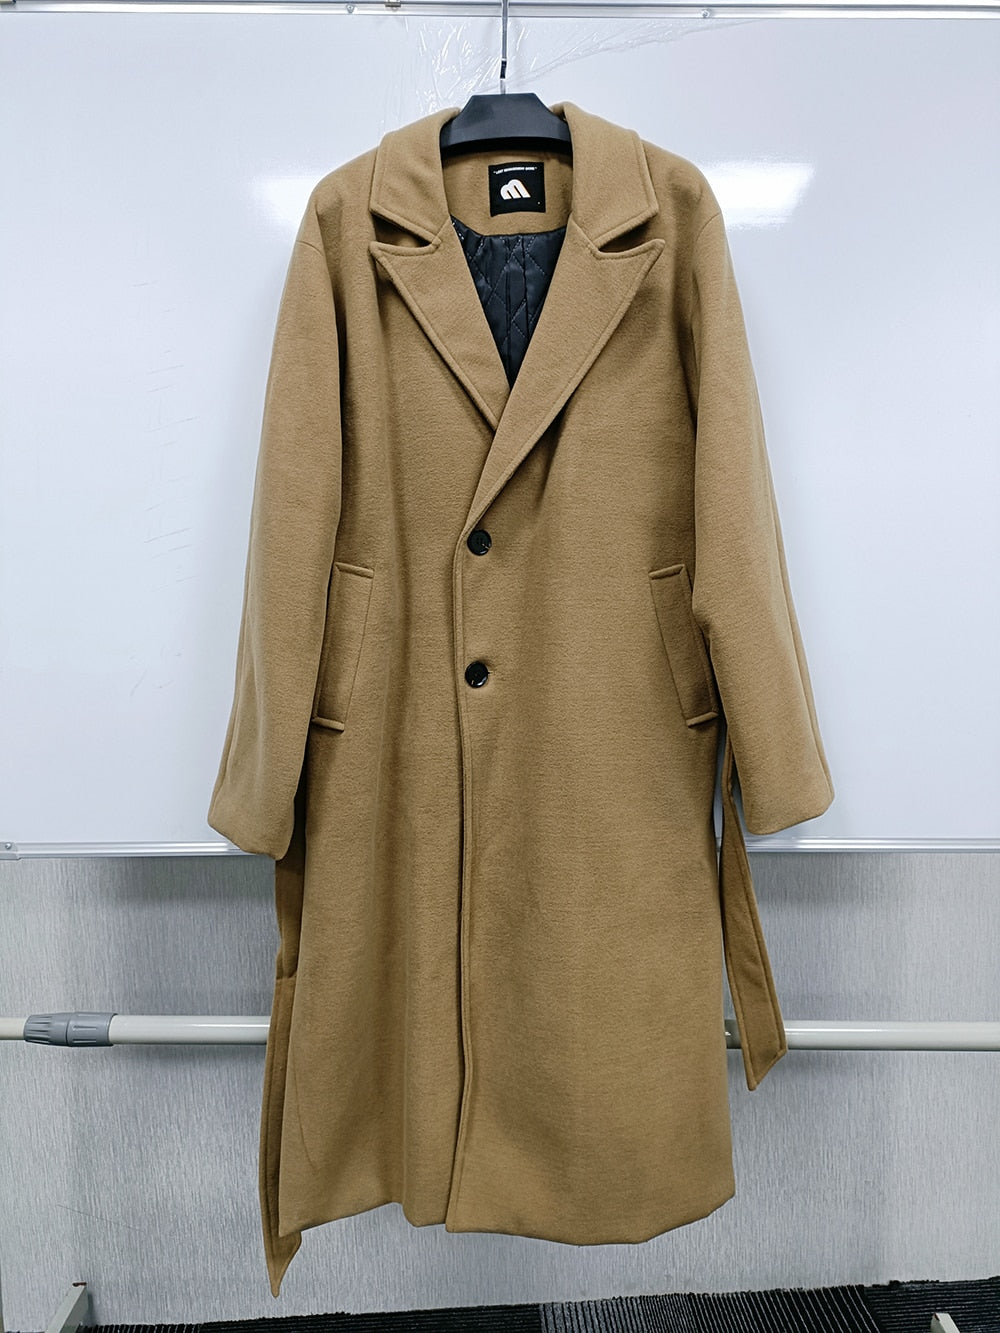 IEFB Korean Trend Men's Loose Casual Single-breasted Overcoat Autumn Winter Fashion New Long Sleeve Woolen Long Coat 9D1665